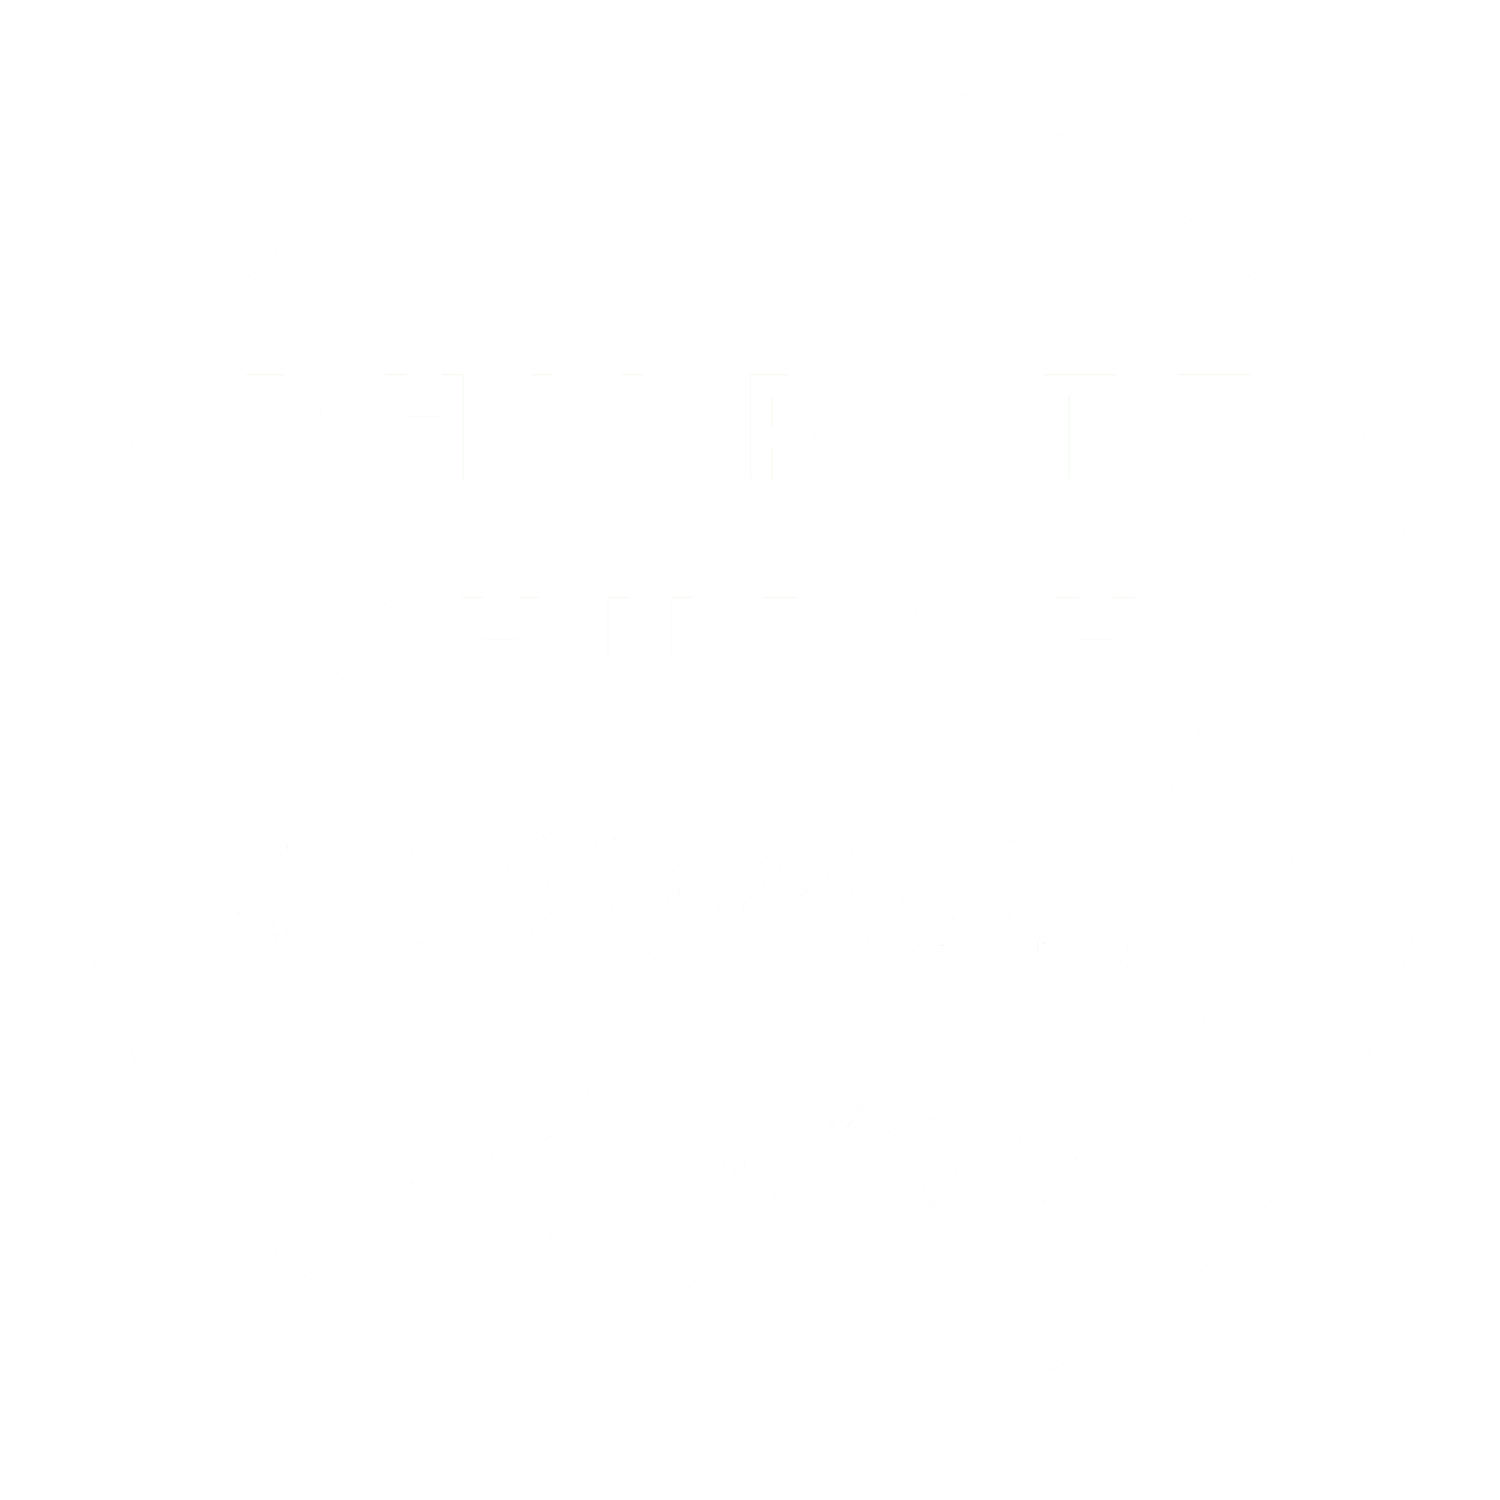 Philpott Church